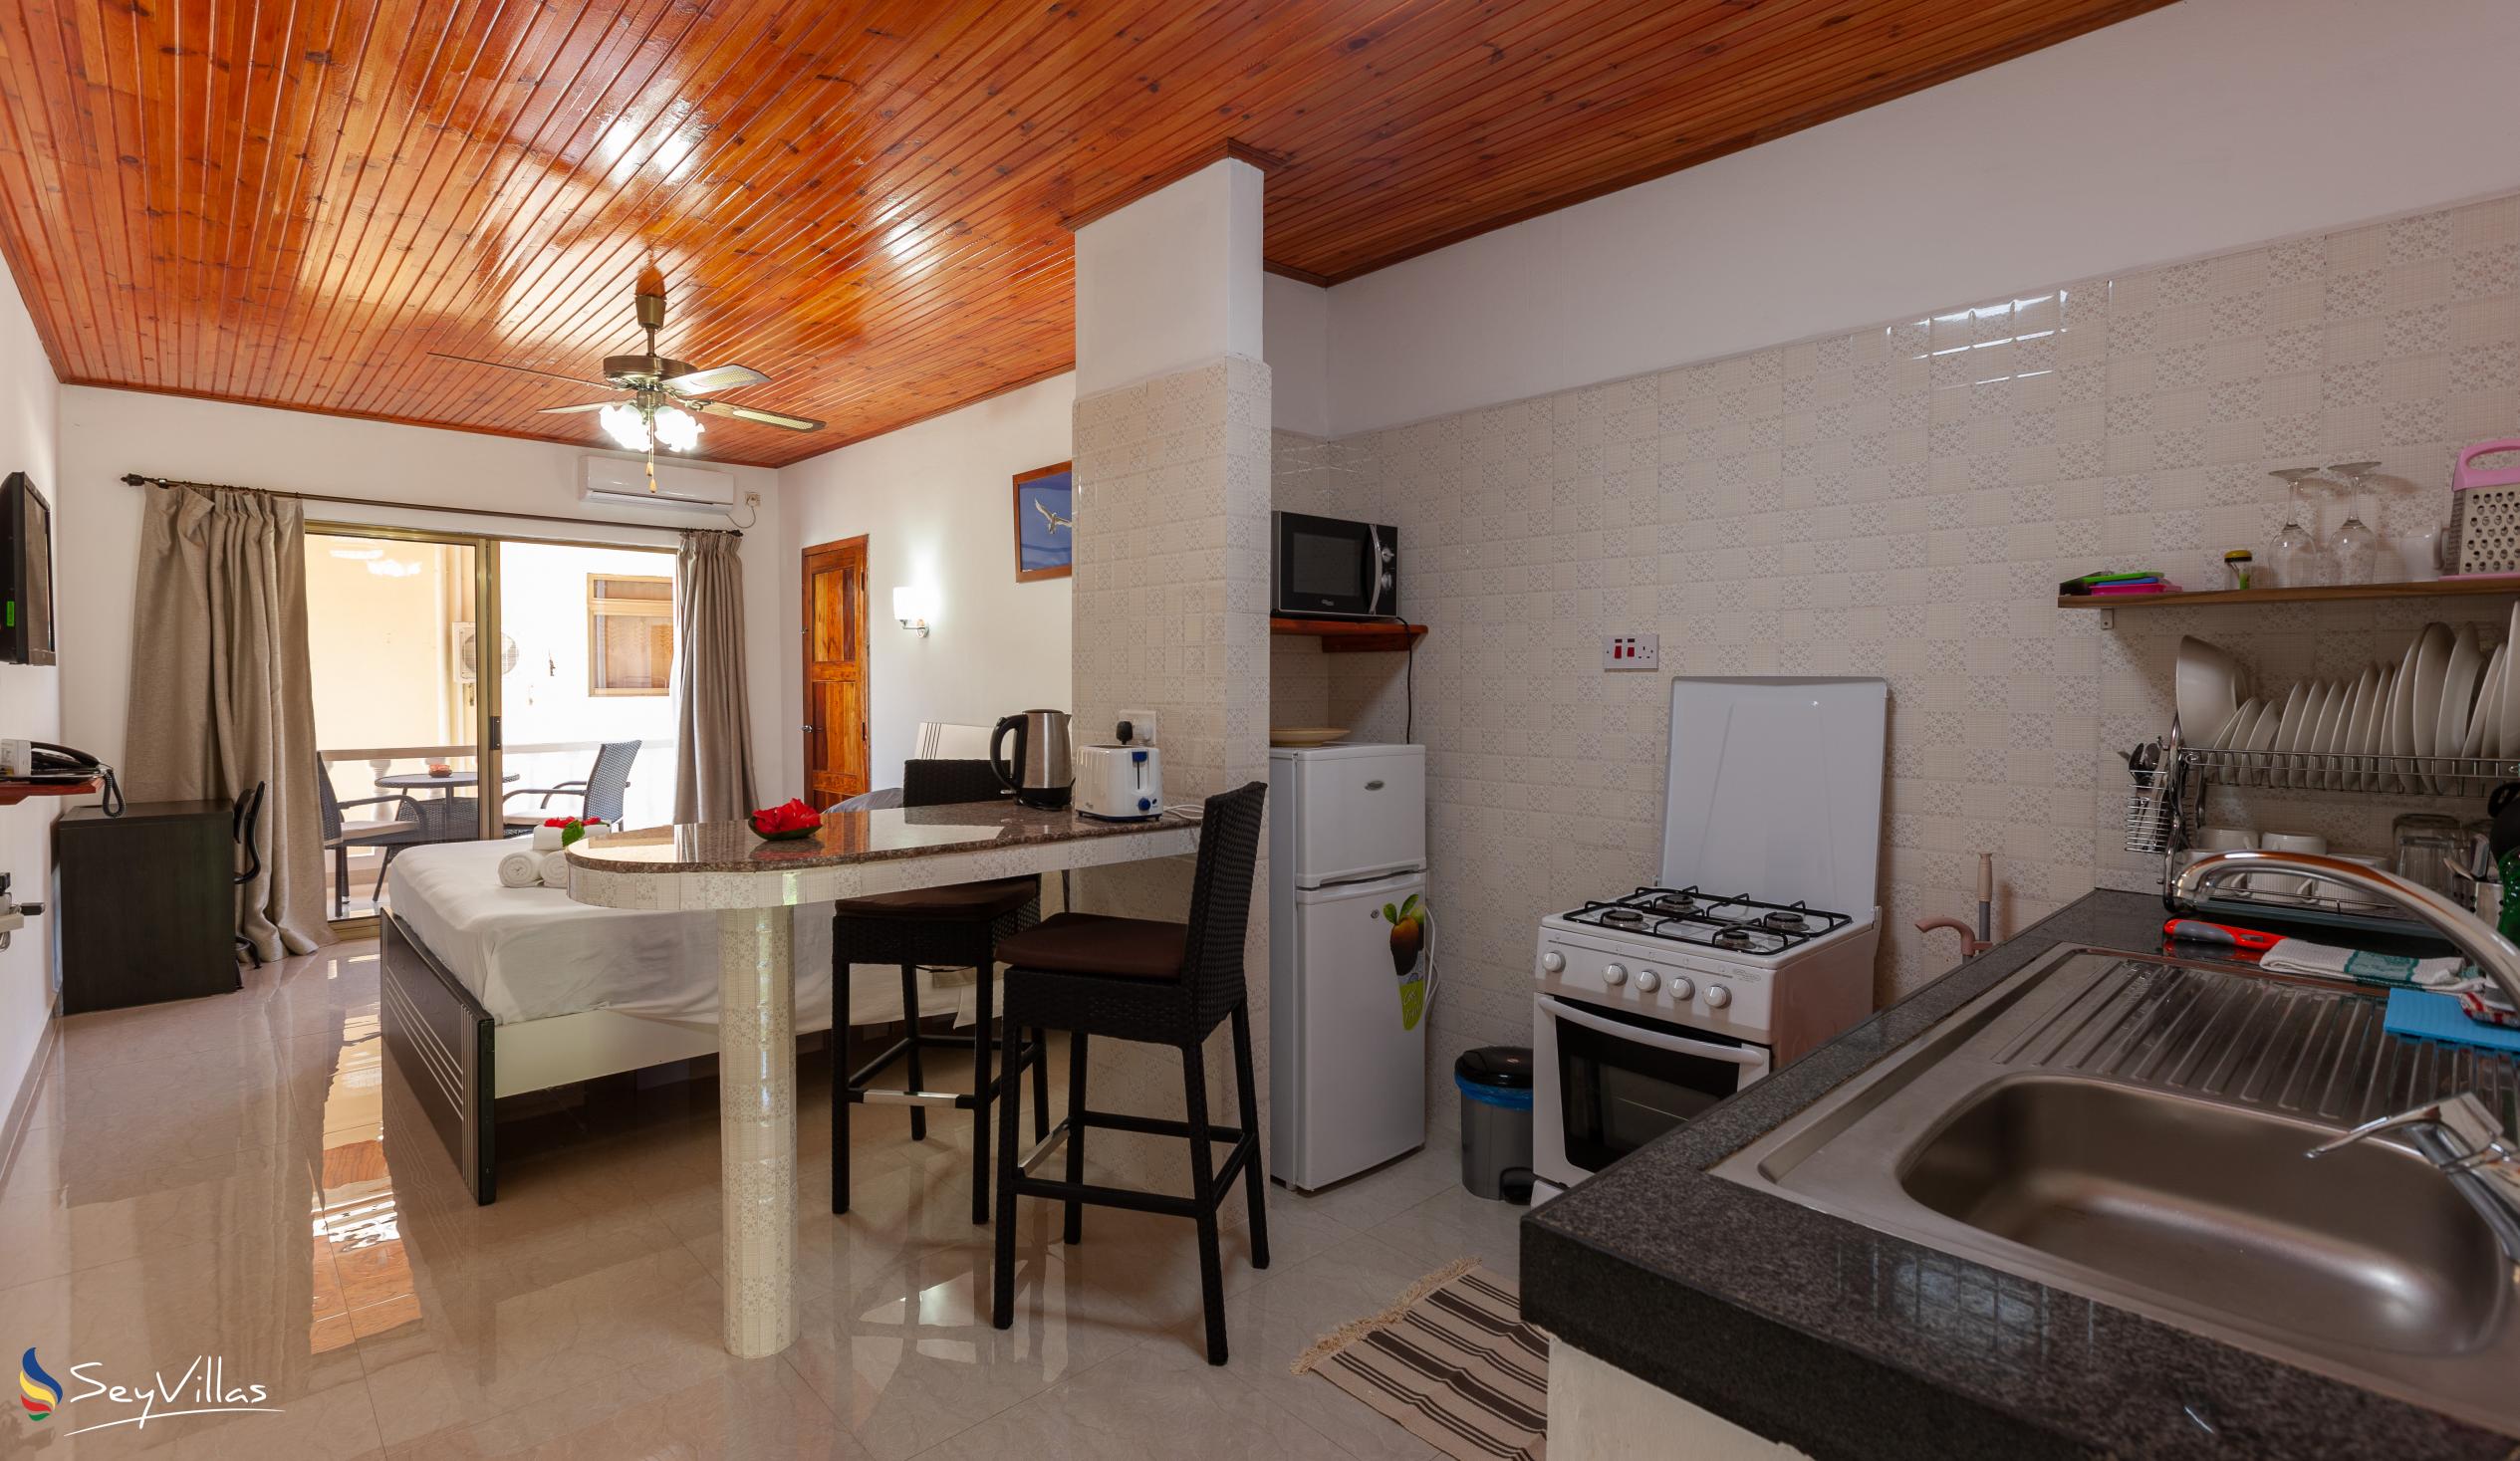 Photo 53: Tourterelle Holiday Home - Standard Studio - Praslin (Seychelles)